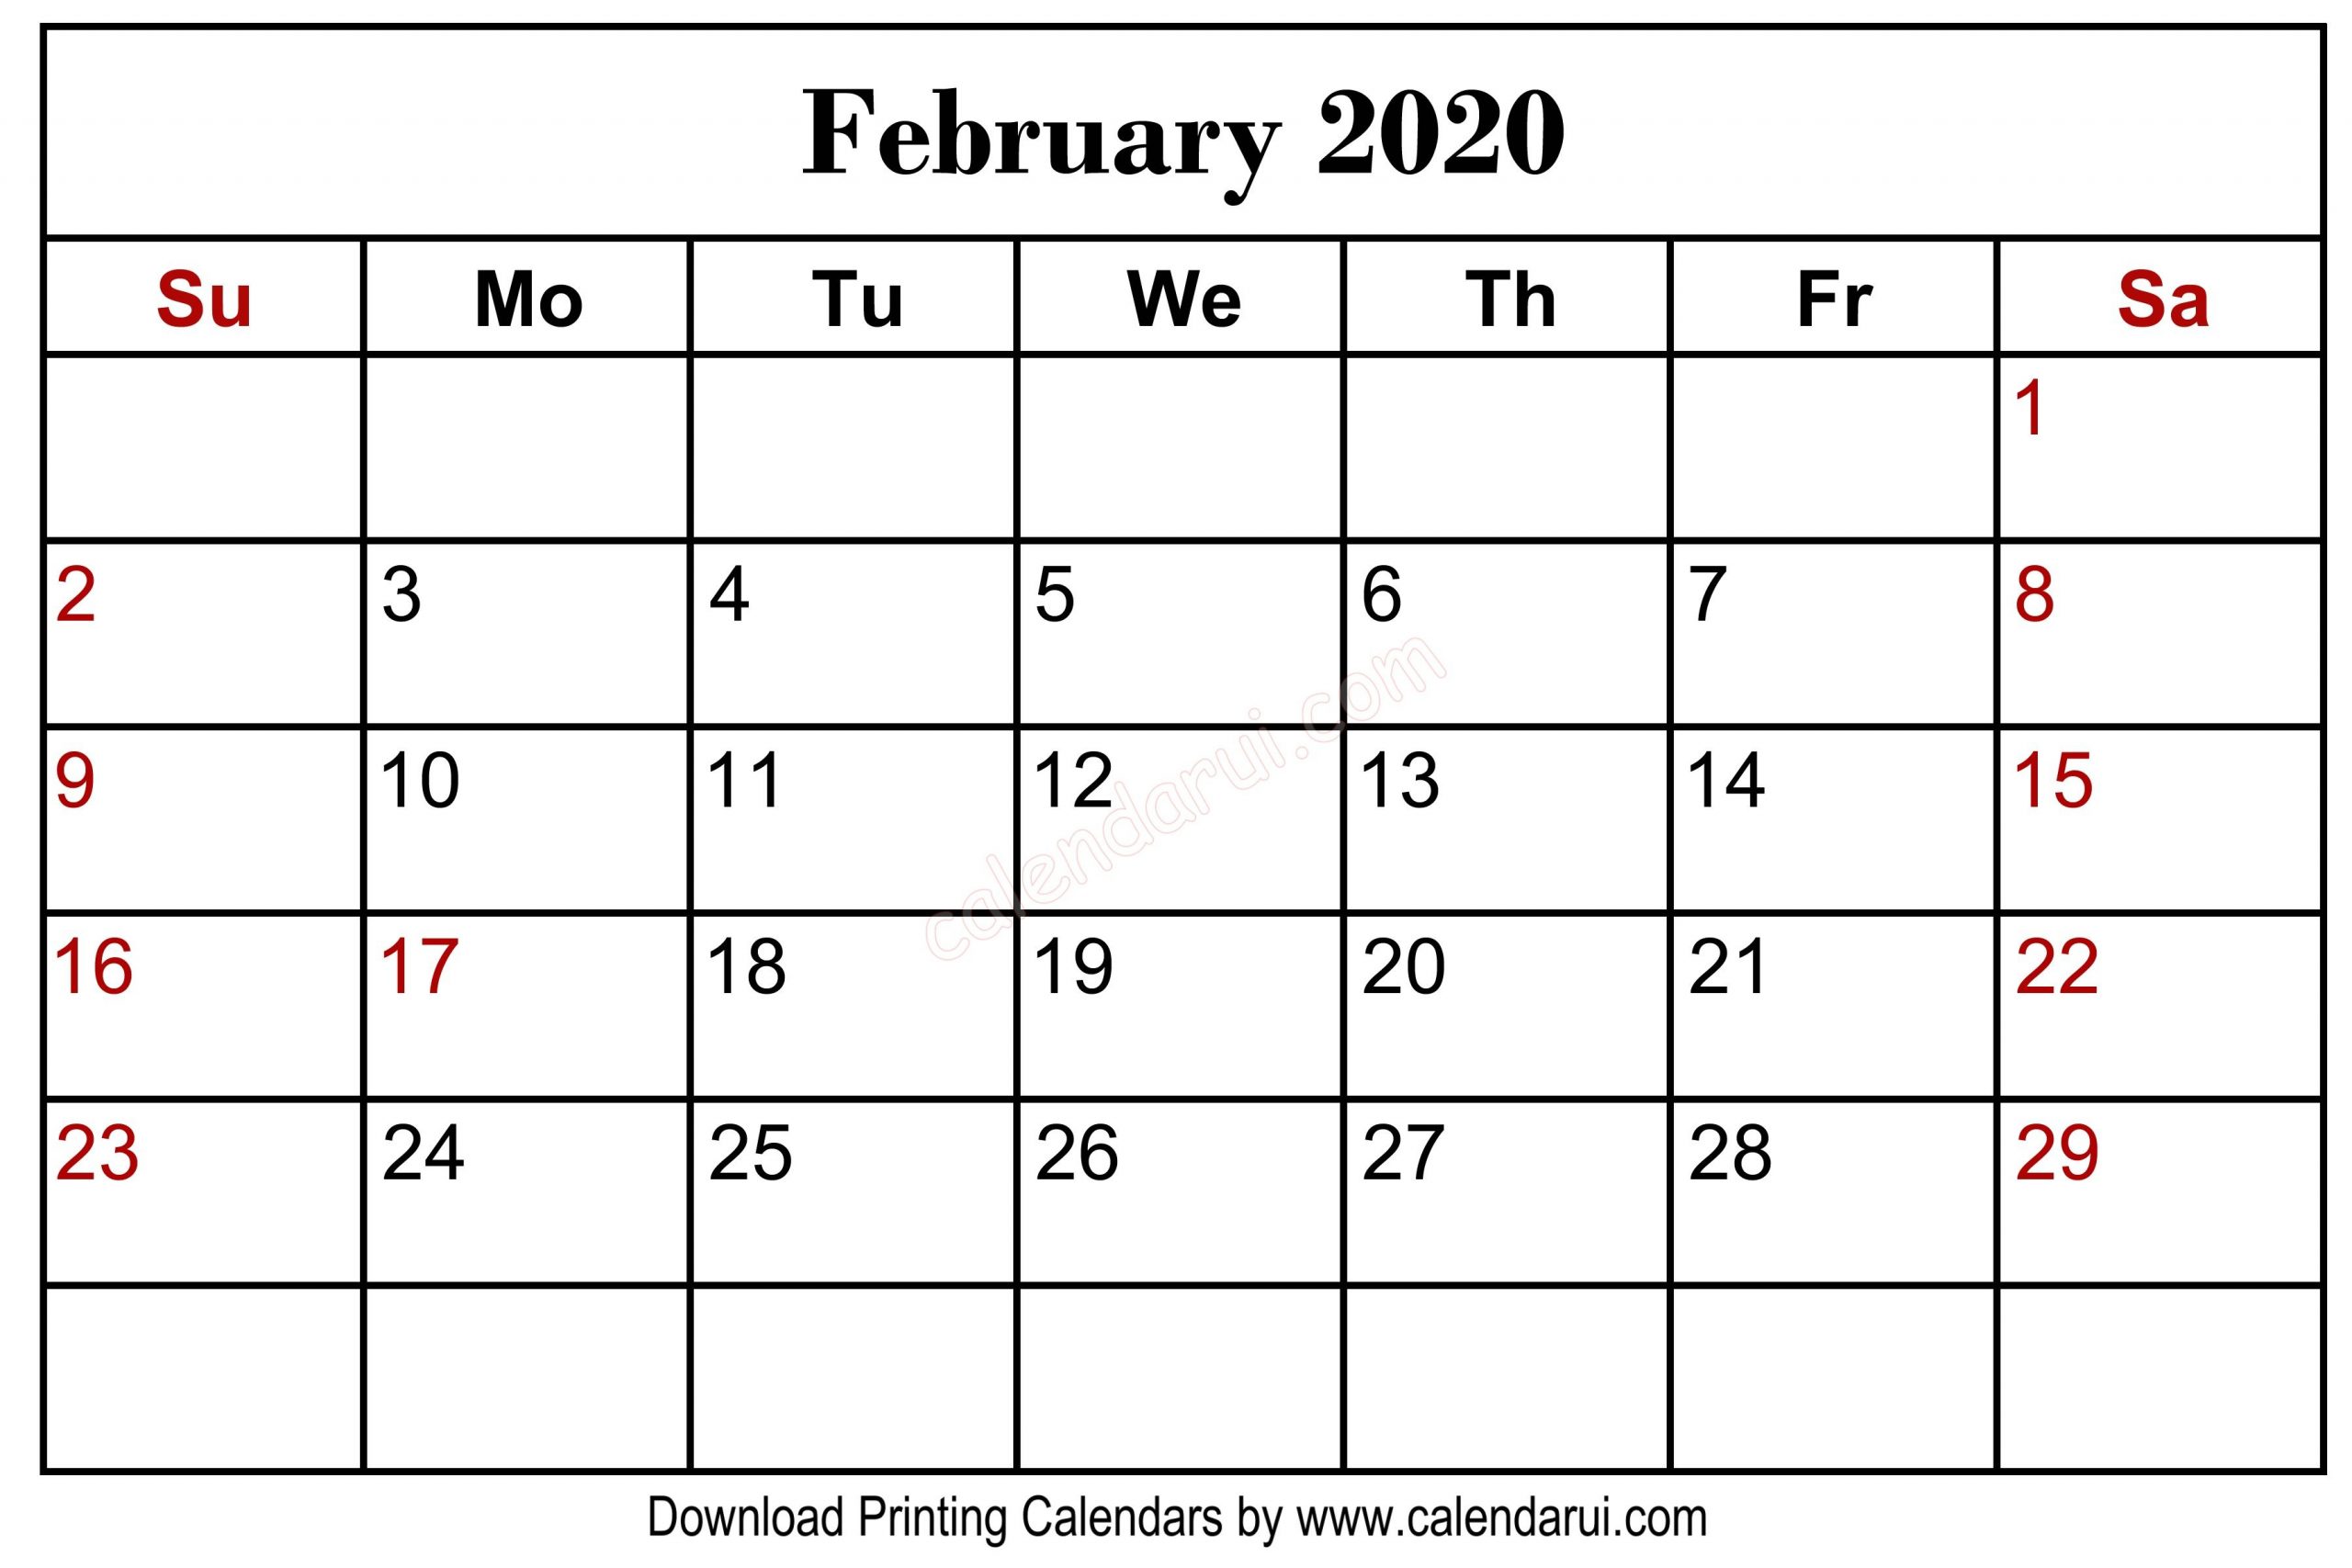 February 2020 Daily Calendar